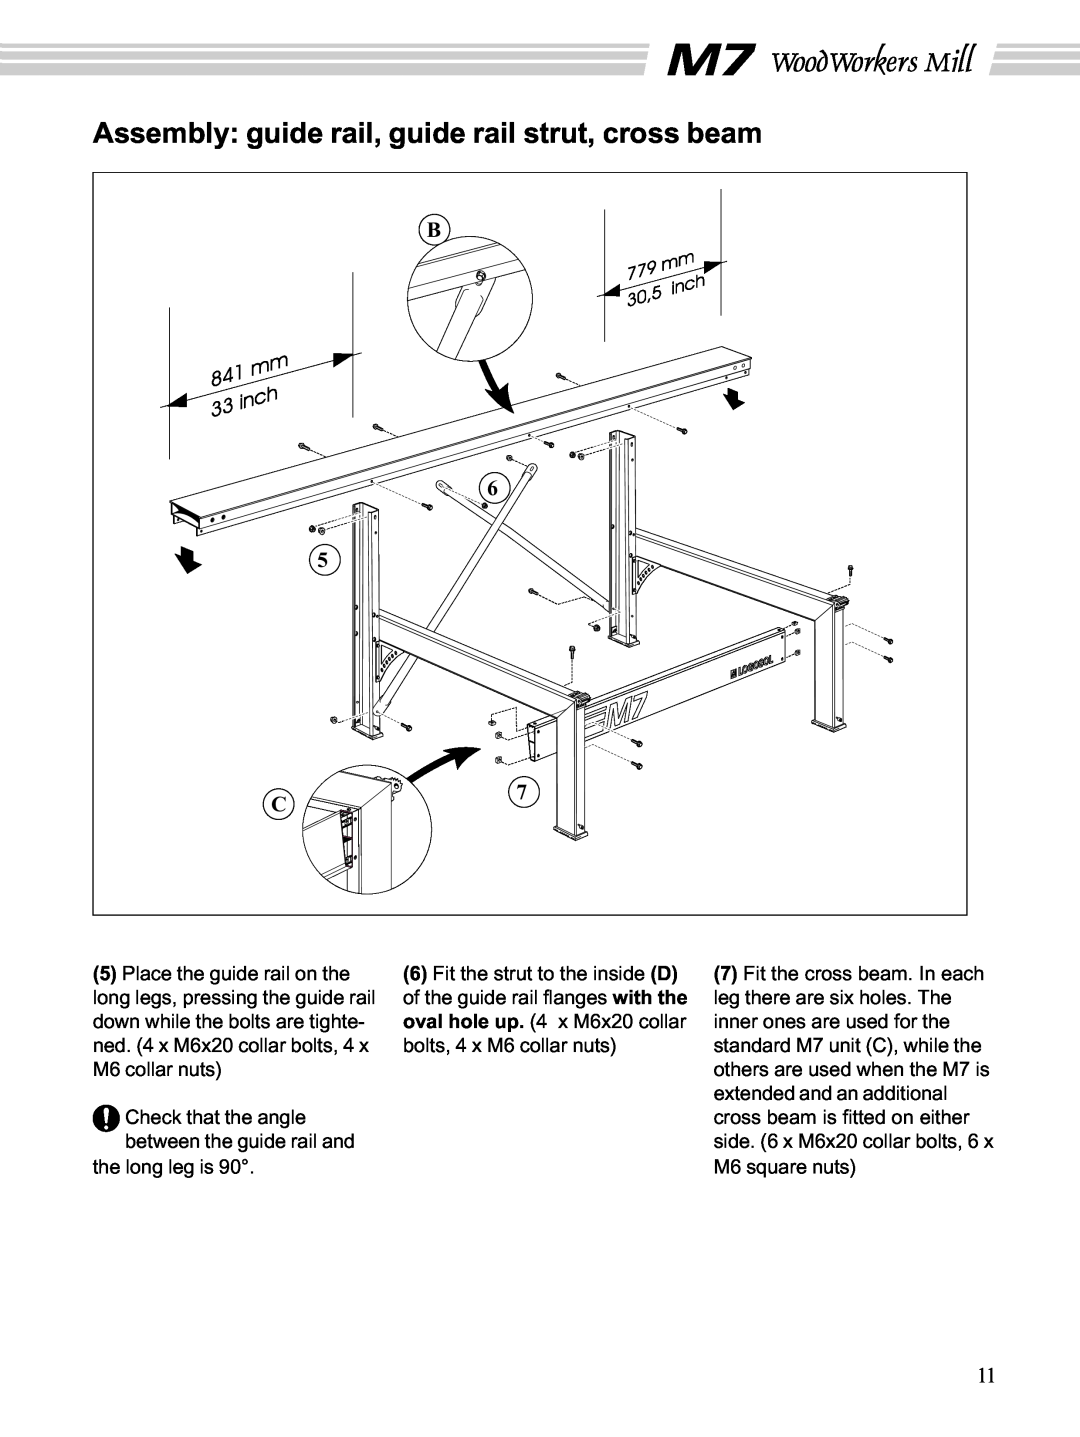 Husqvarna M7 manual Assembly guide rail, guide rail strut, cross beam 